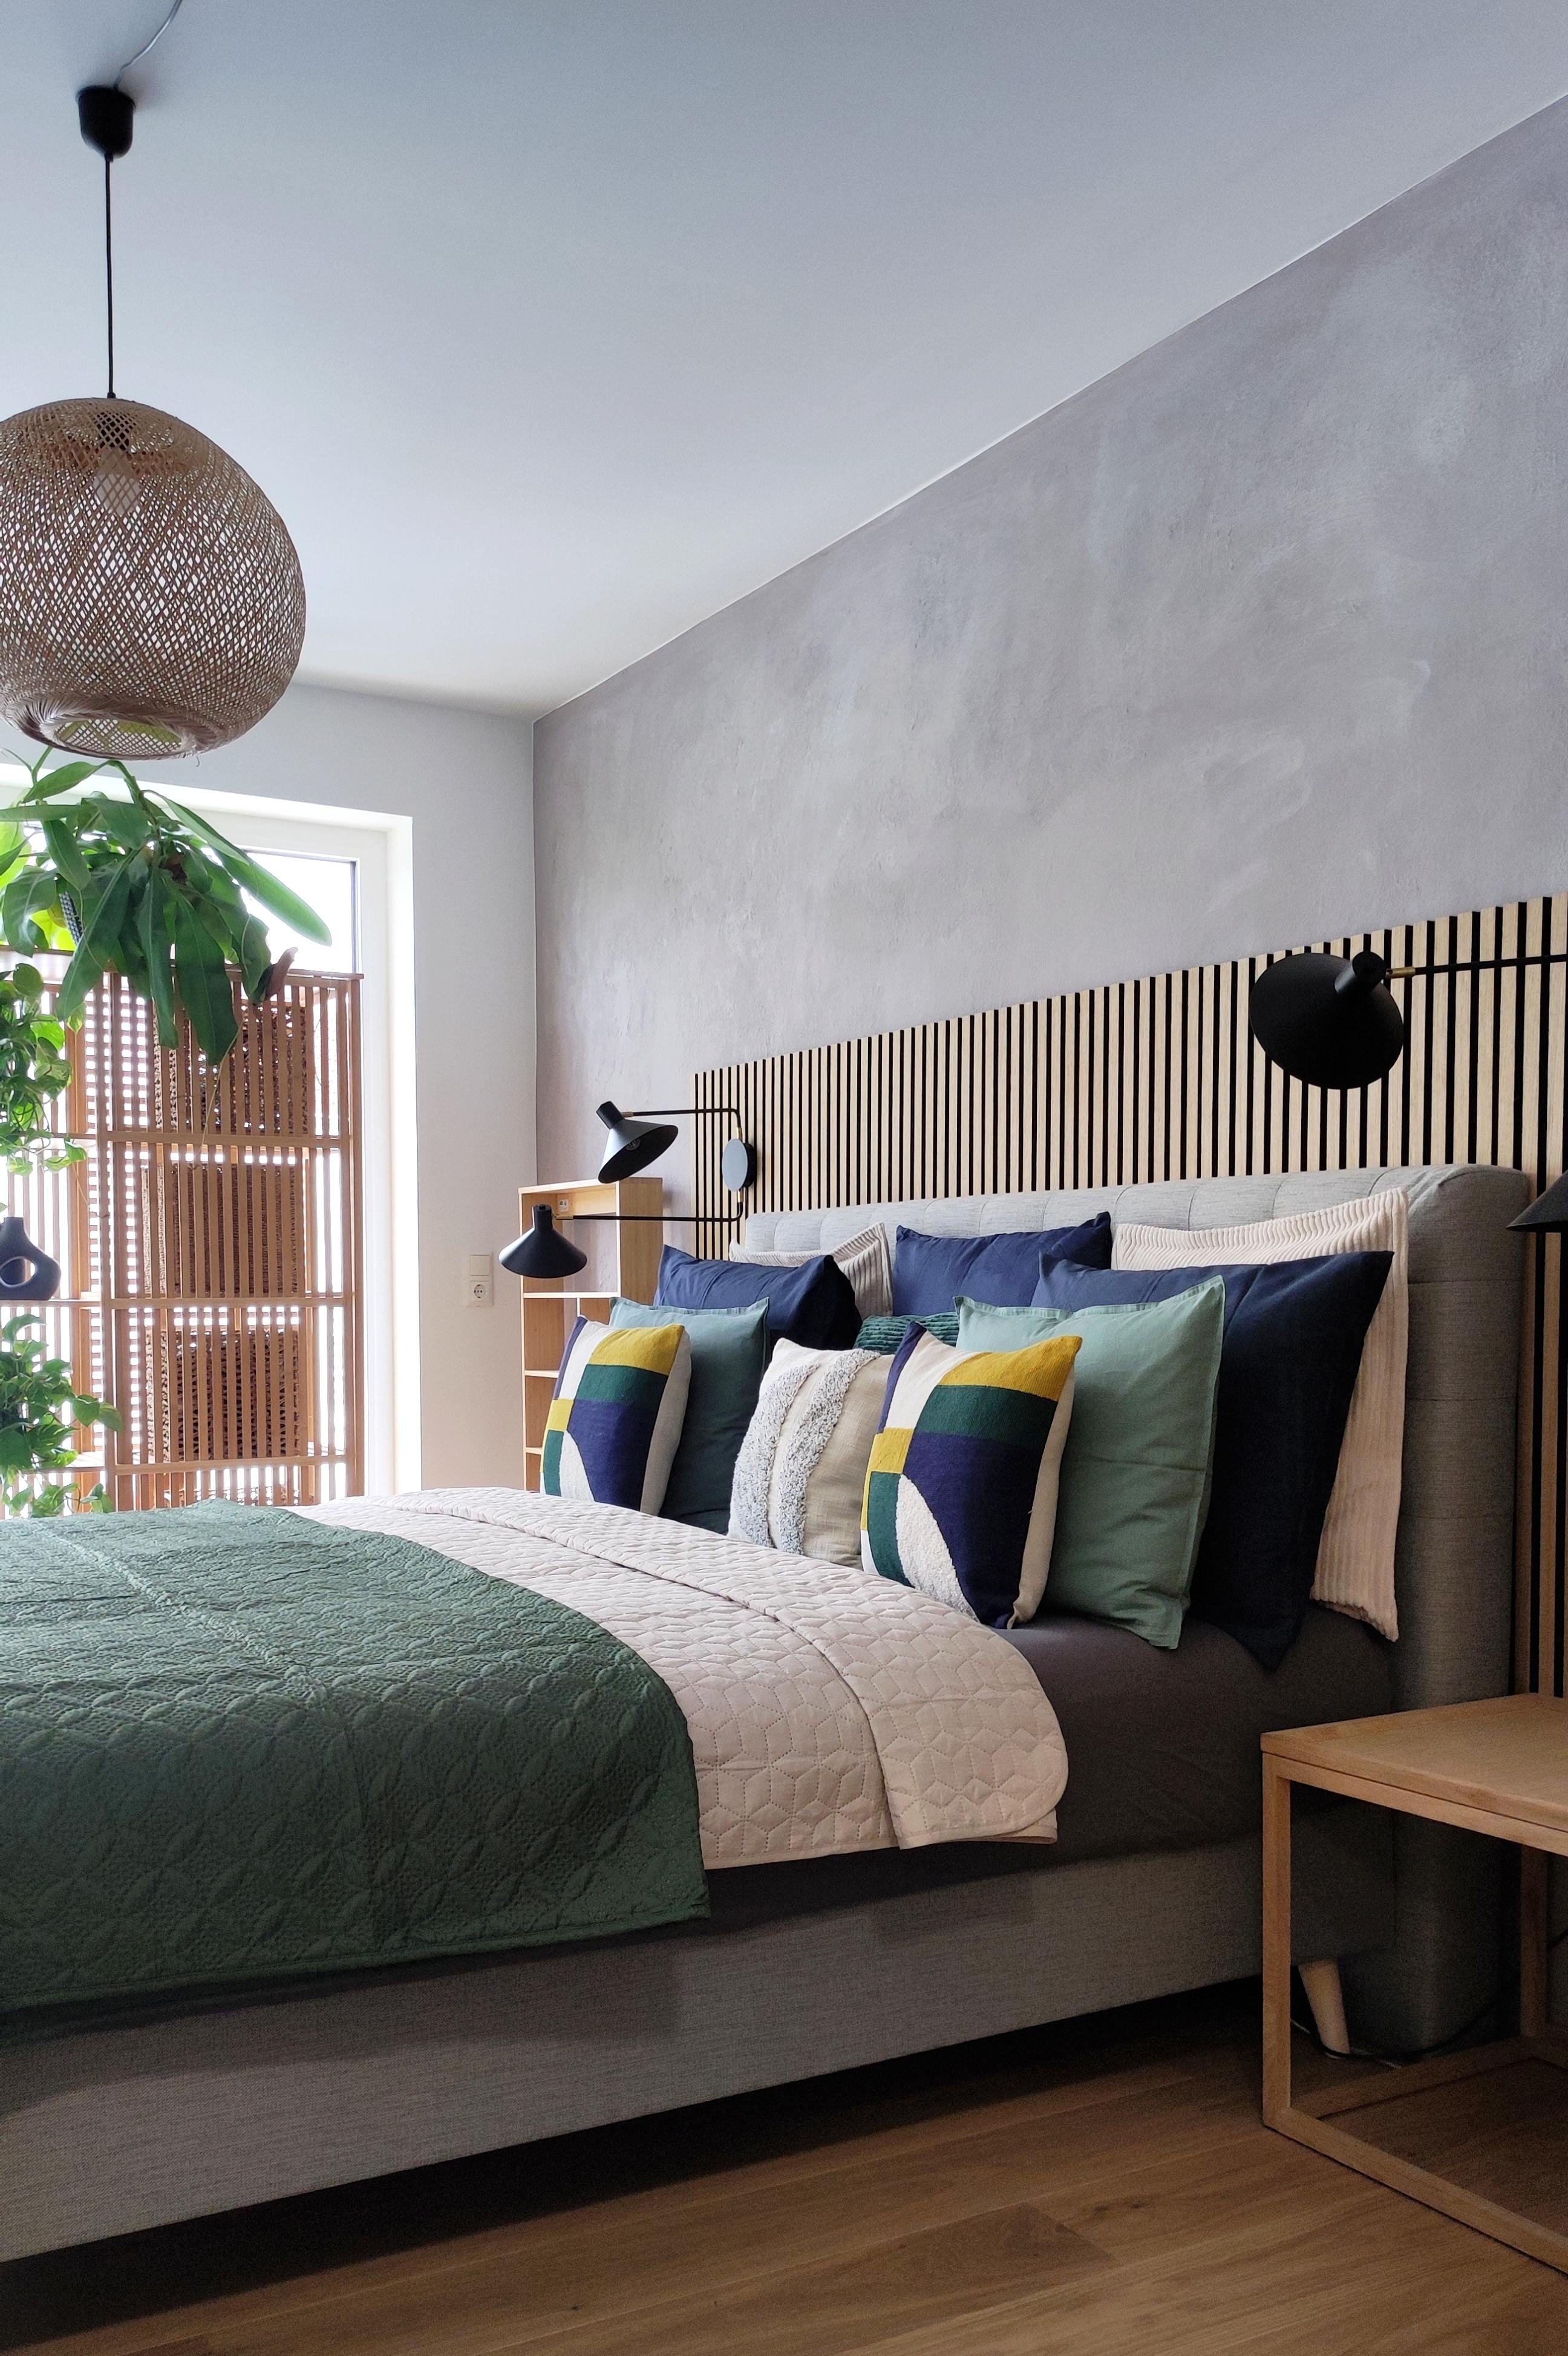 #living #livingroom #interior #interiordesign #decor #decoration #home #homedecor #pillow #paneele #look #couchliebt 